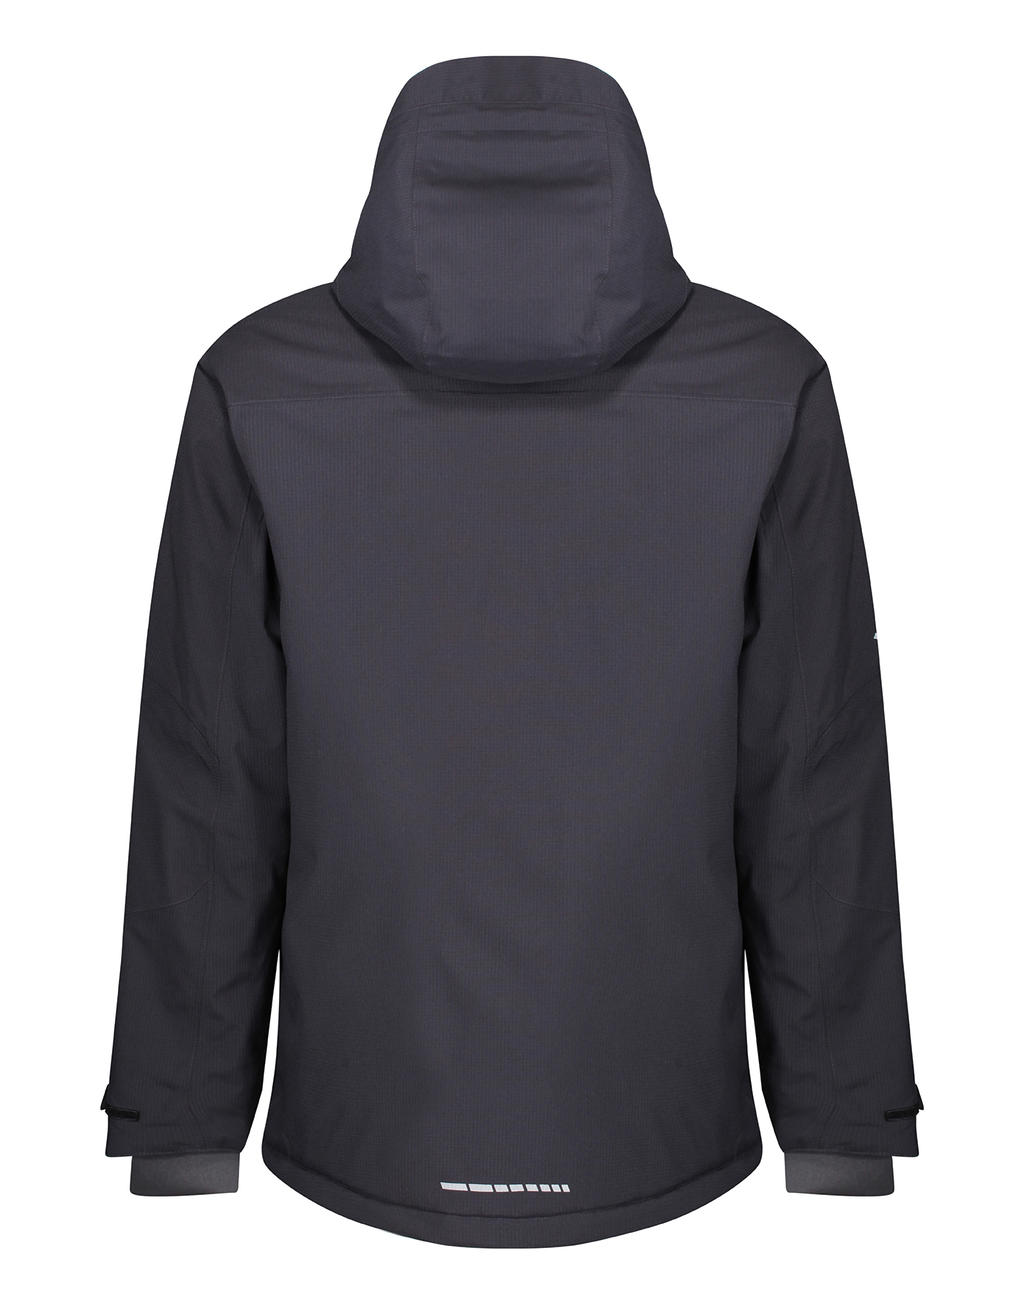  Marauder III Insulated Jacket in Farbe Grey/Black